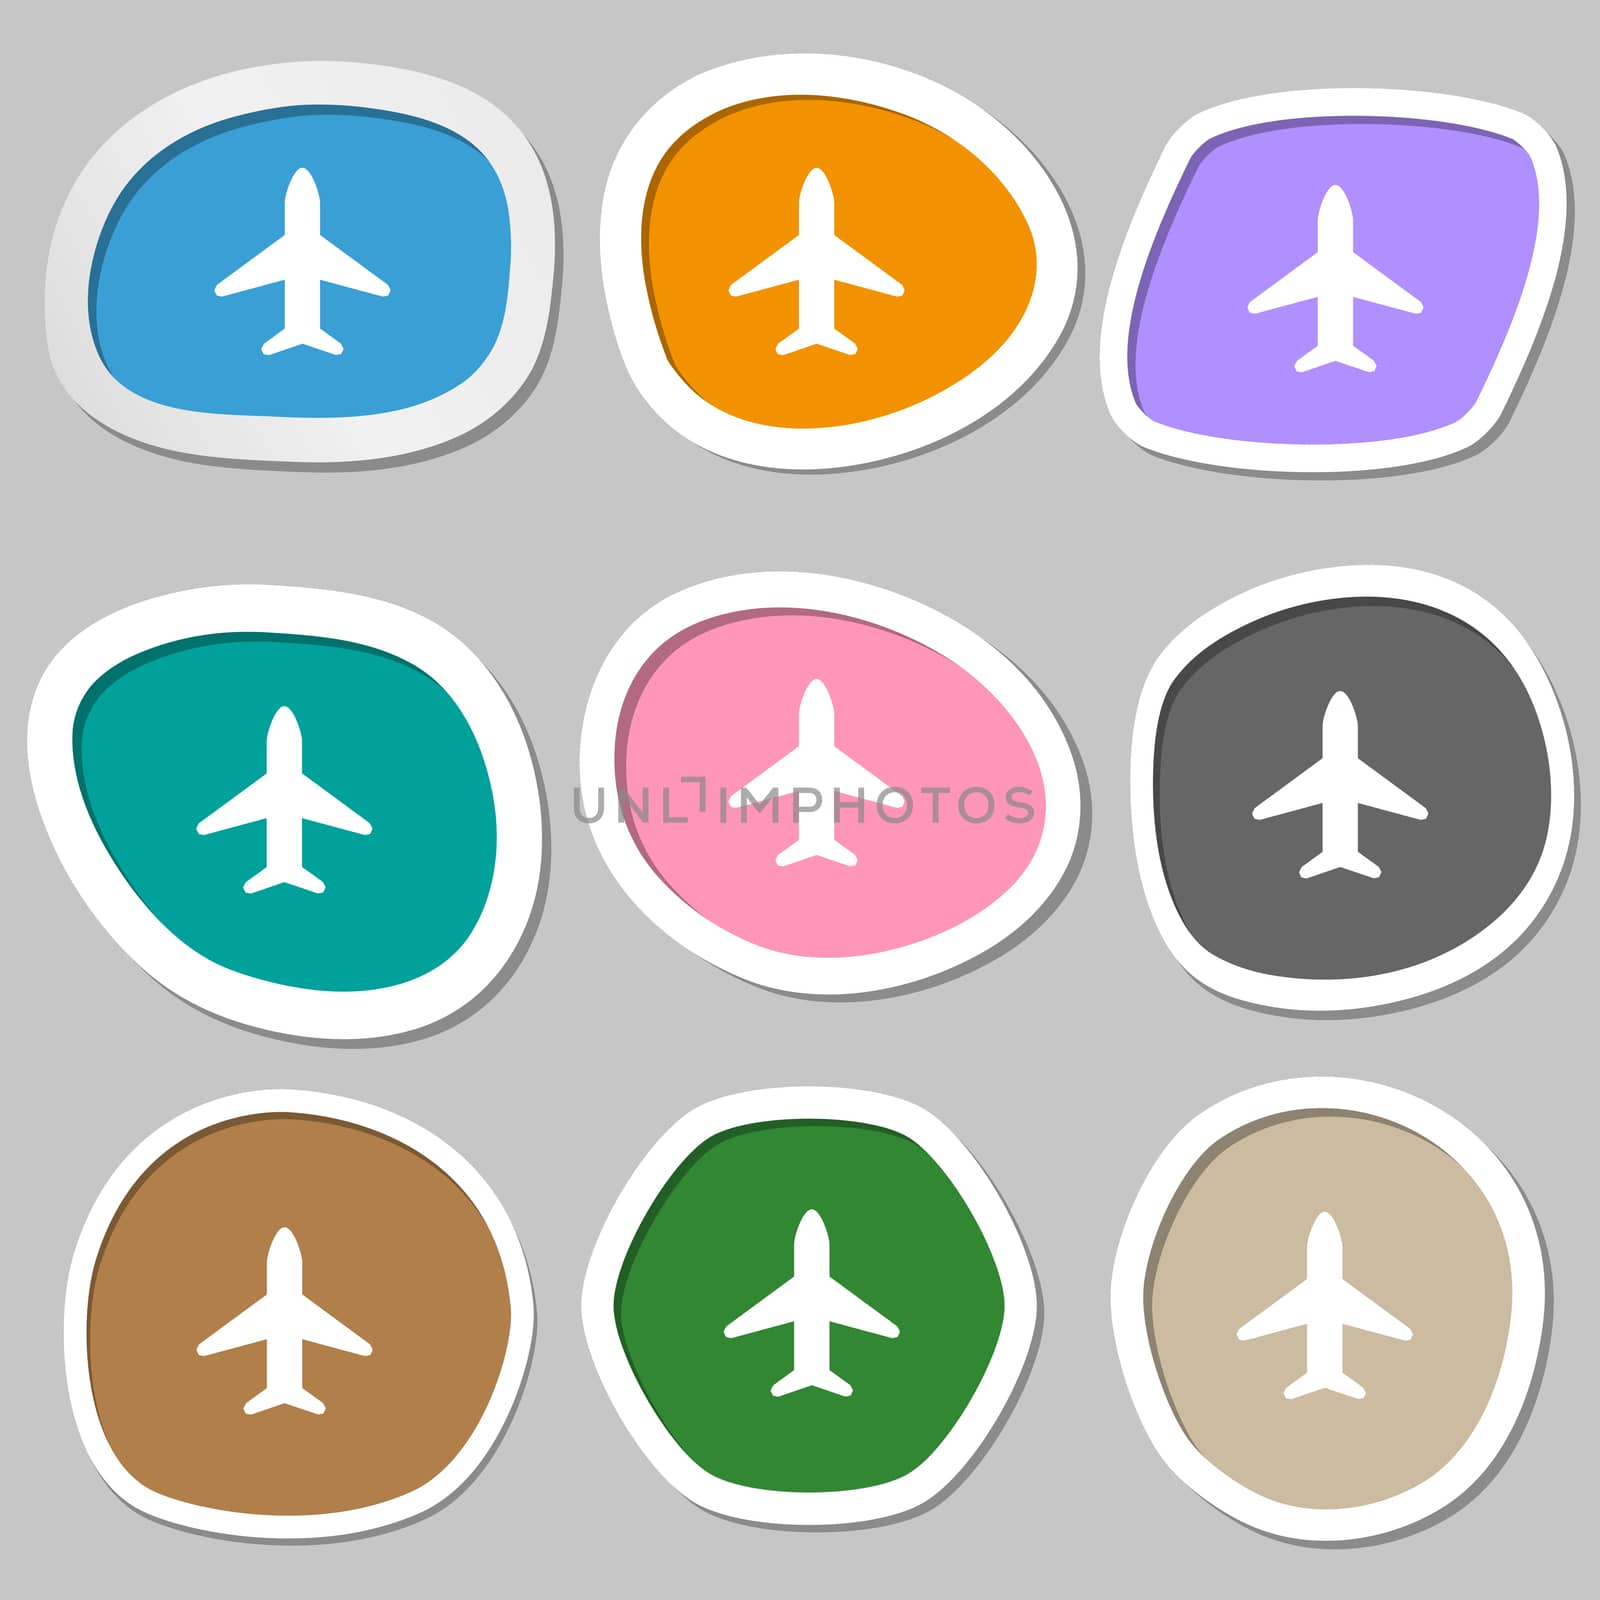 Airplane, Plane, Travel, Flight icon symbols. Multicolored paper stickers. illustration